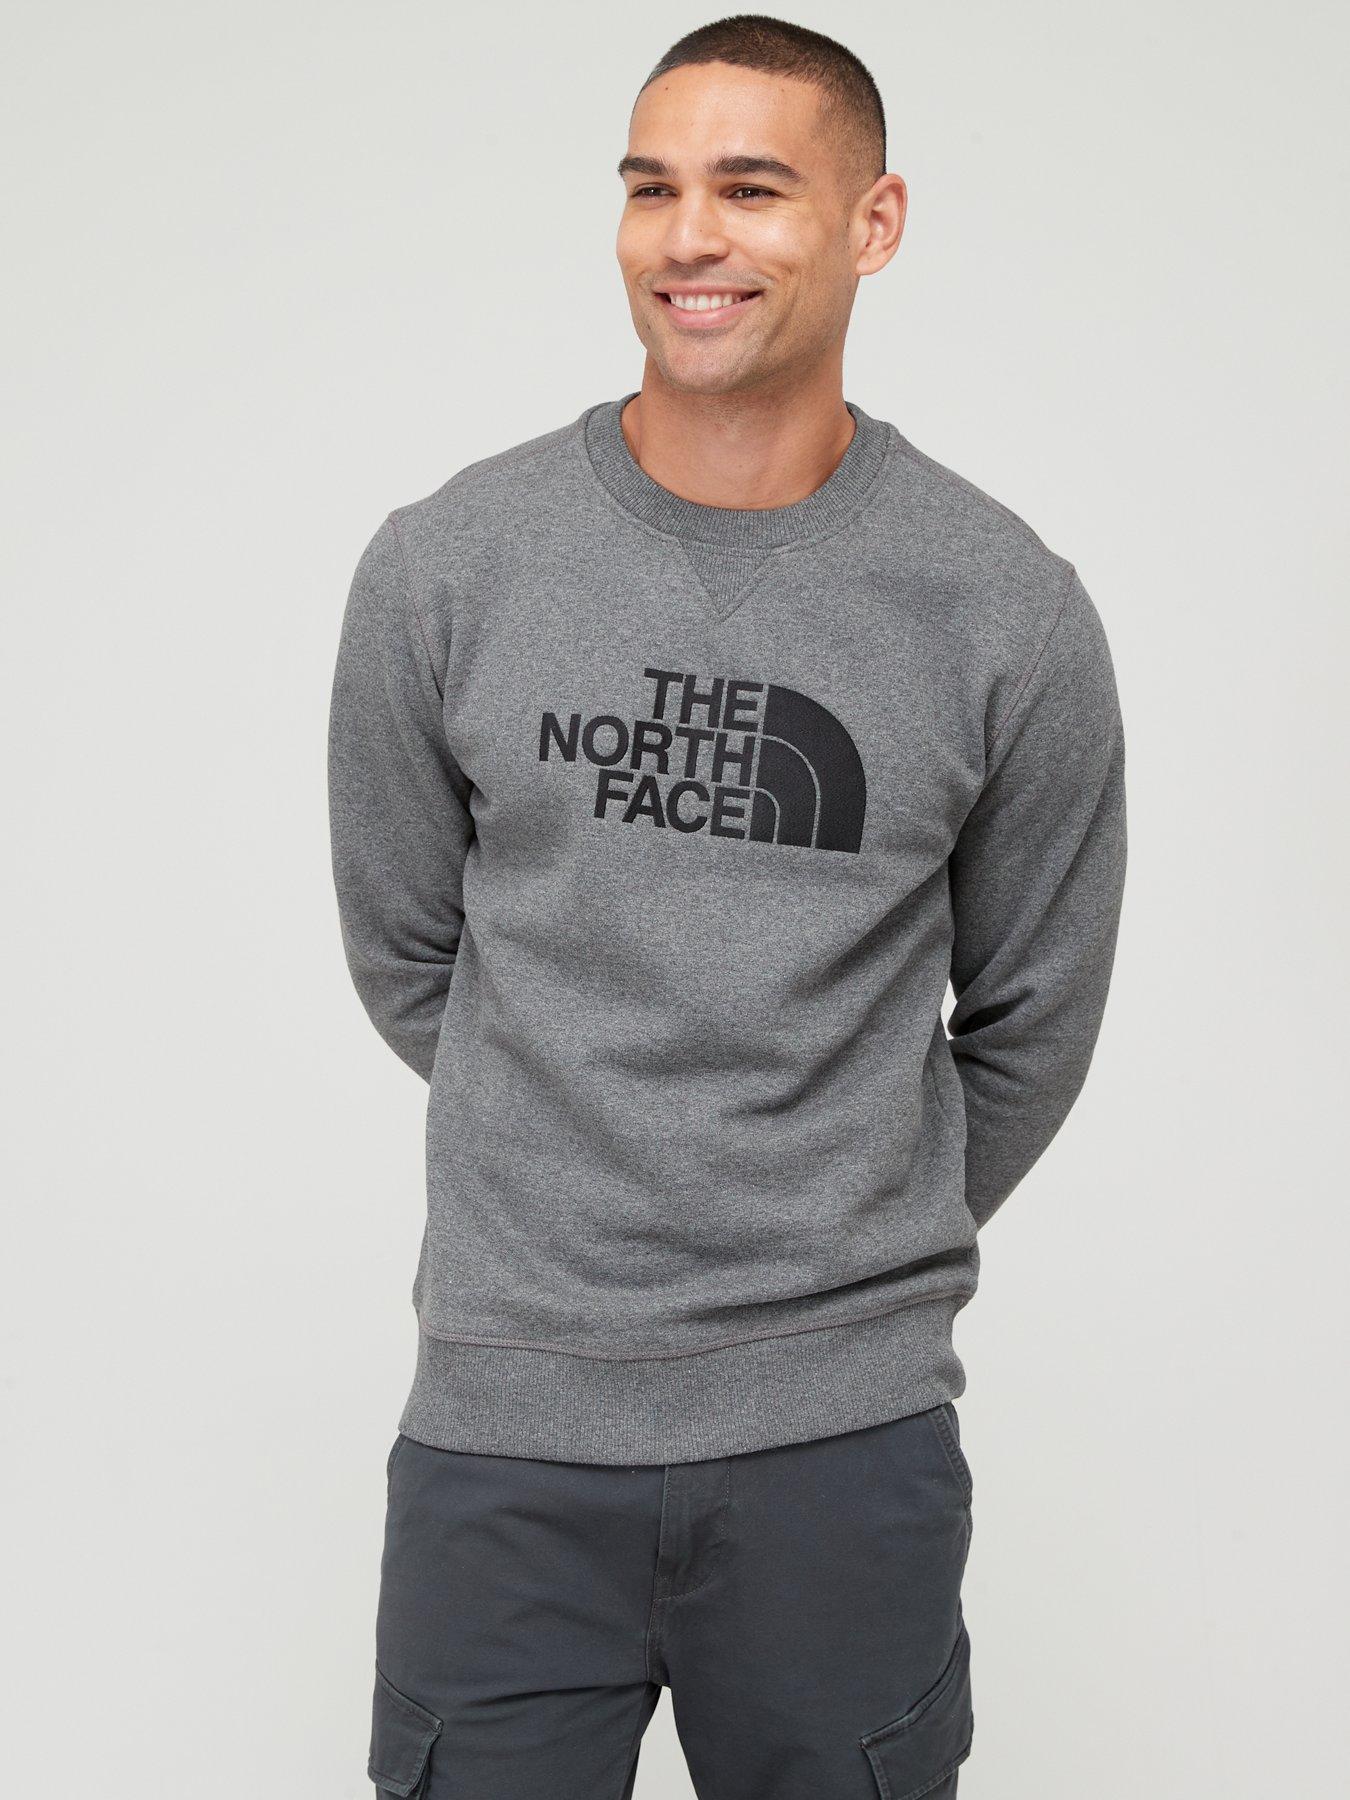 north face clothing ireland